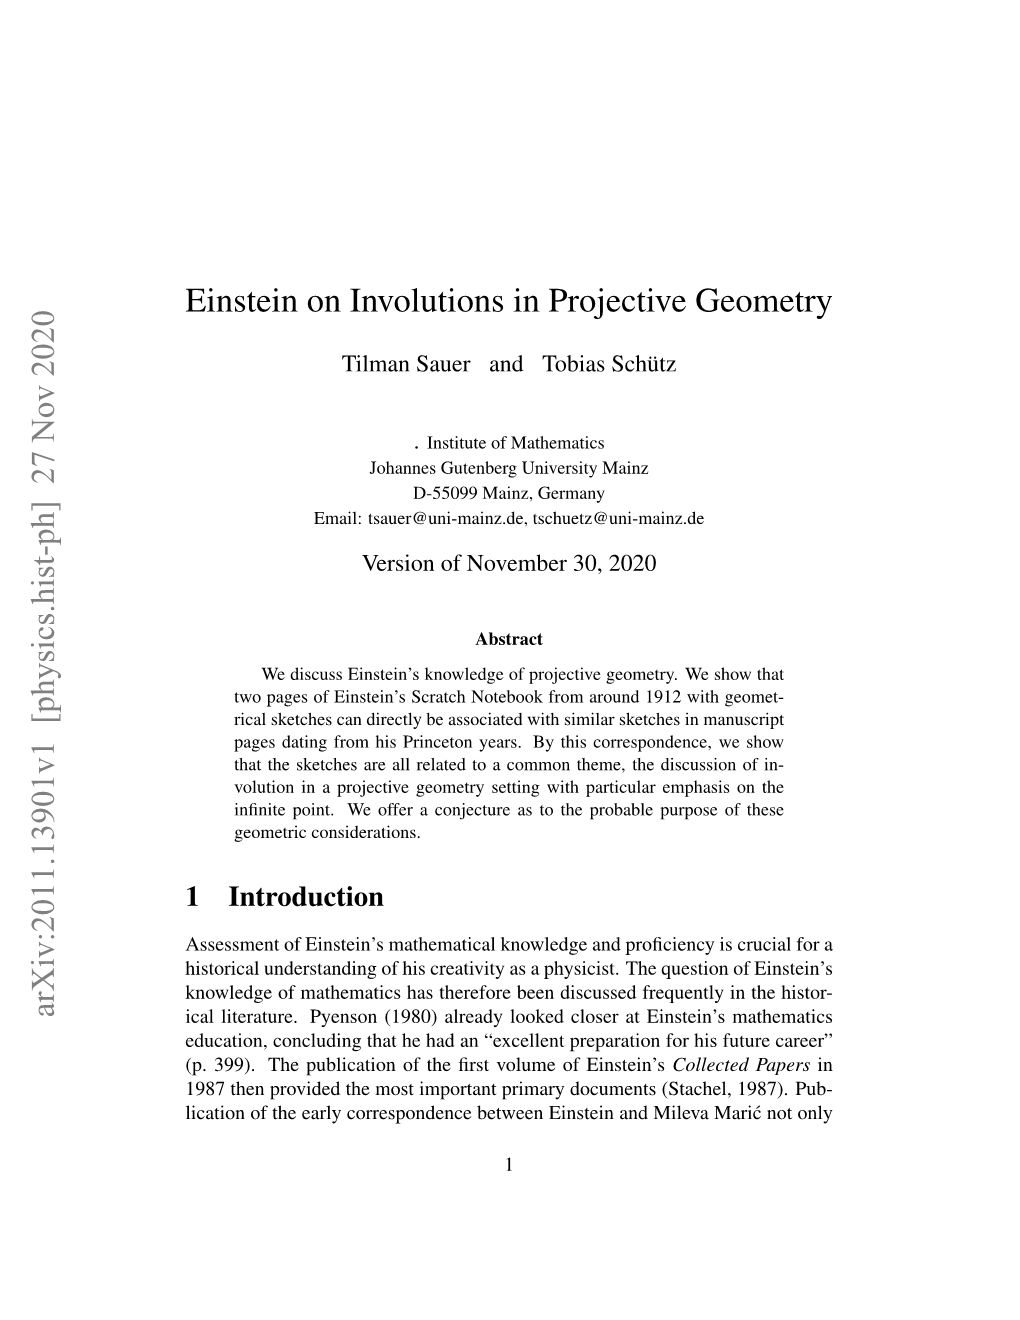 Einstein on Involutions in Projective Geometry Arxiv:2011.13901V1 [Physics.Hist-Ph] 27 Nov 2020